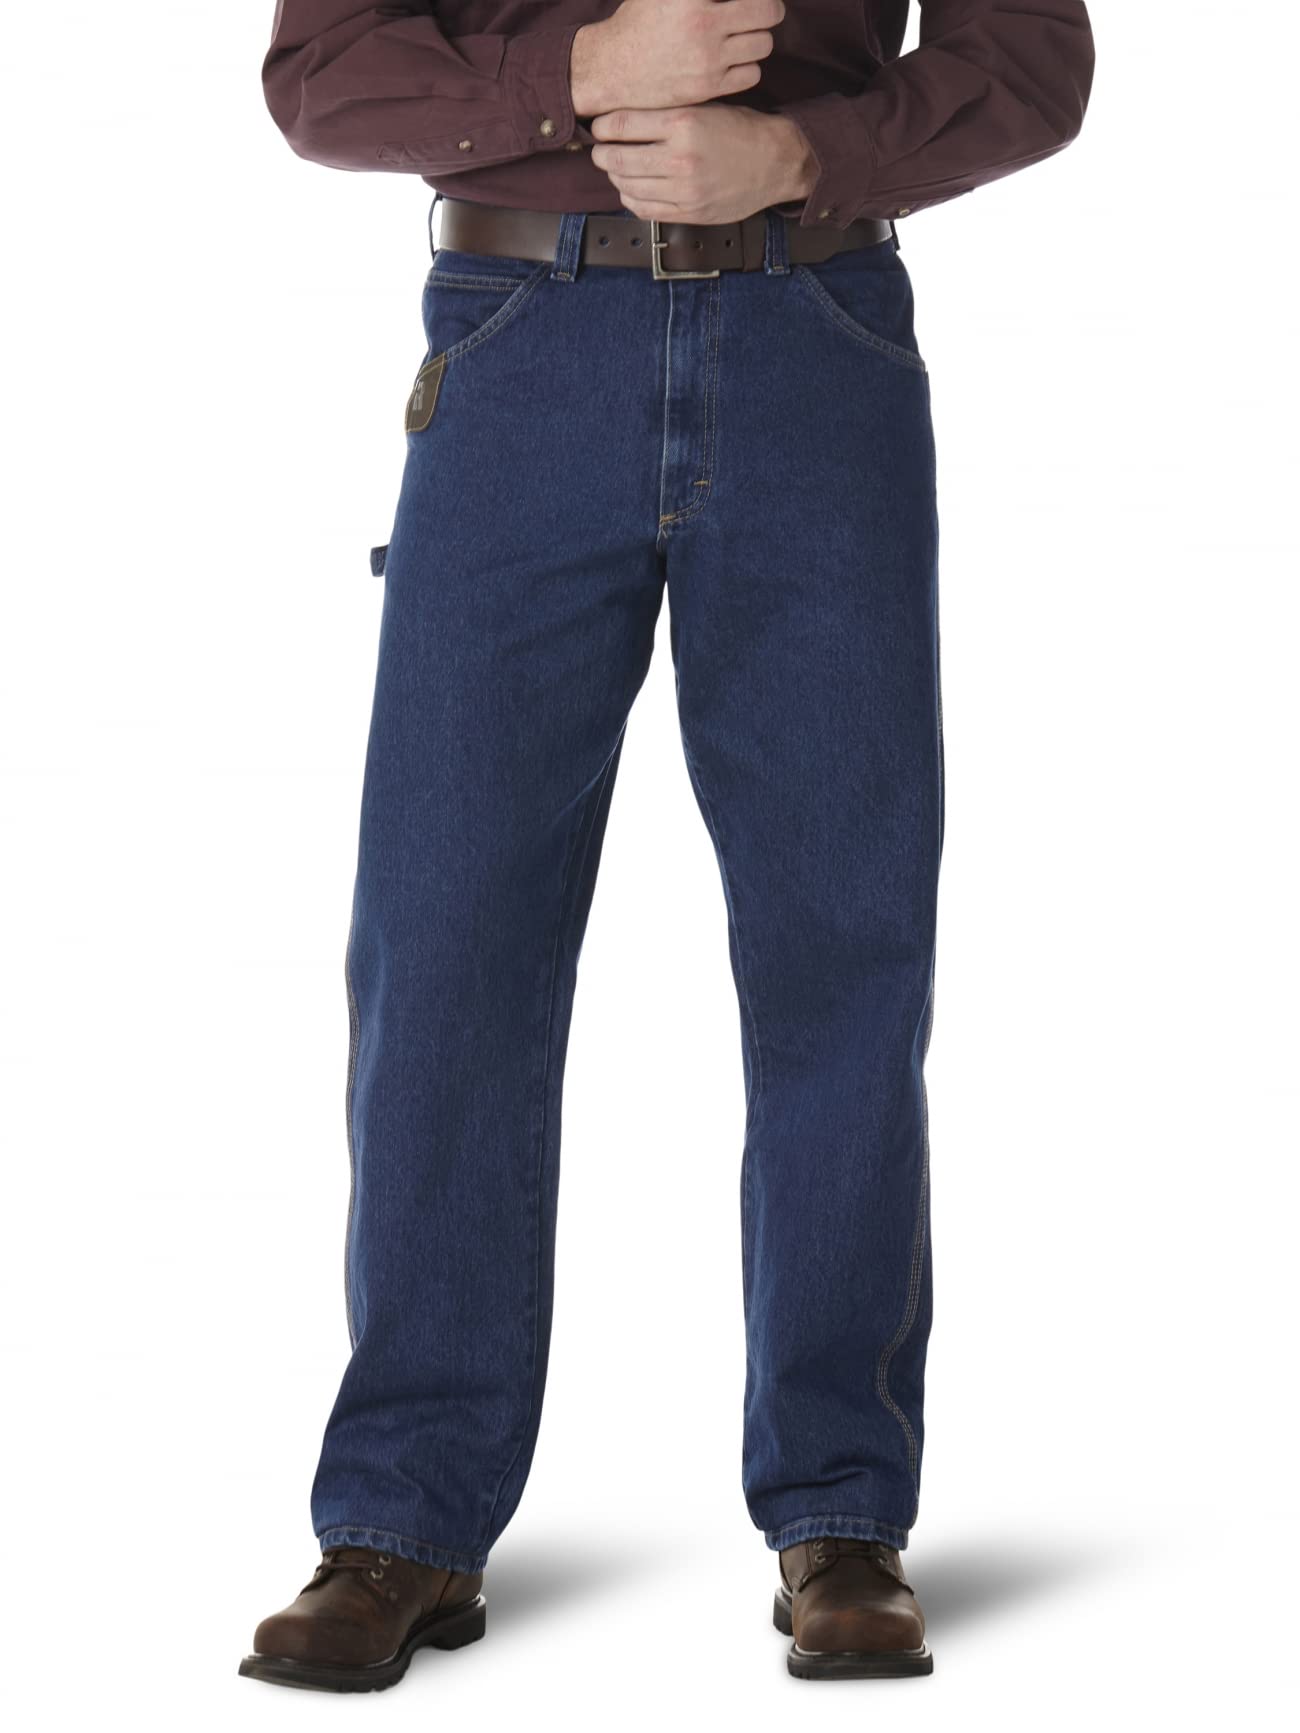 Mua Wrangler Riggs Workwear Men's Workhorse Jean trên Amazon Mỹ chính hãng  2023 | Giaonhan247